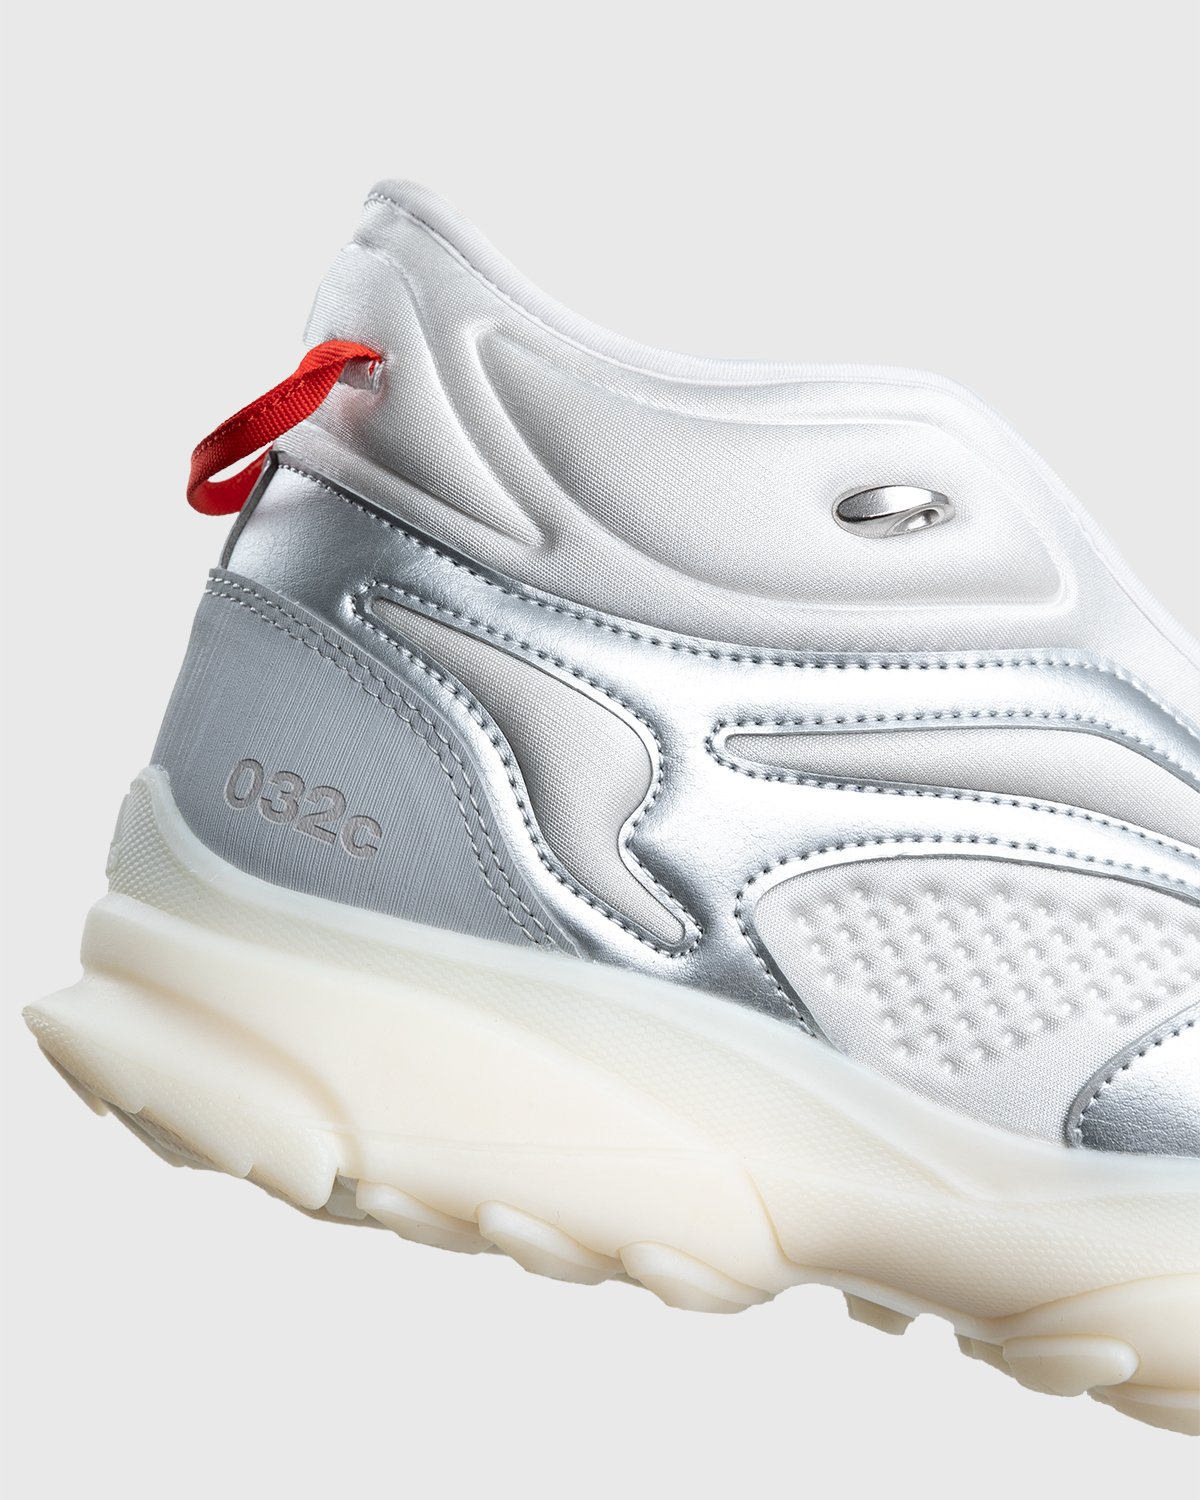 Adidas x 032c - GSG TR Greone - Footwear - White - Image 6